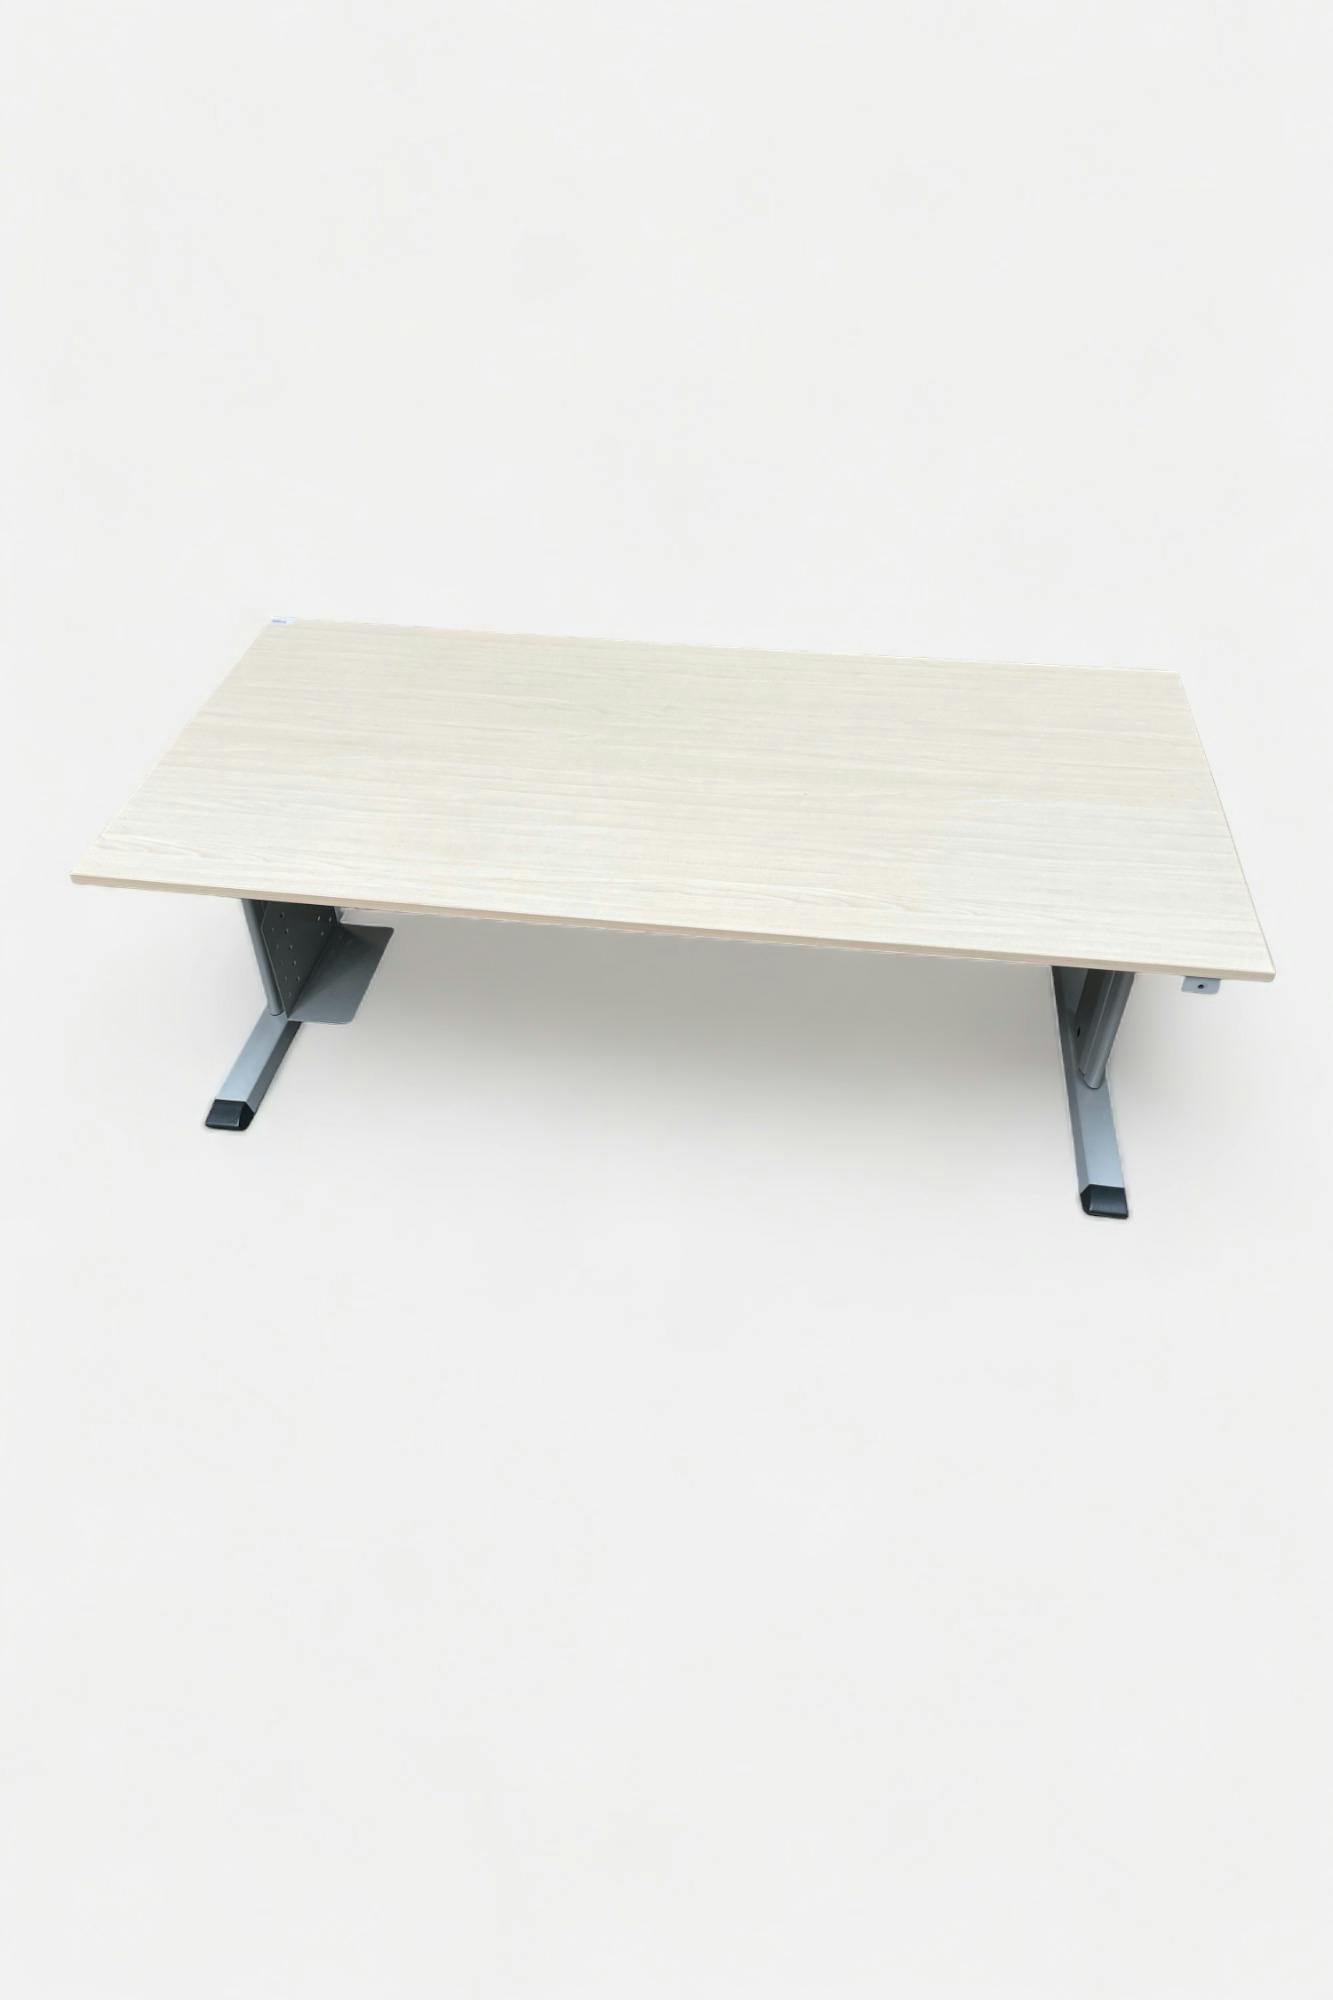 PAMI Wood Desks 180x90cm (adjustable height) - Relieve Furniture